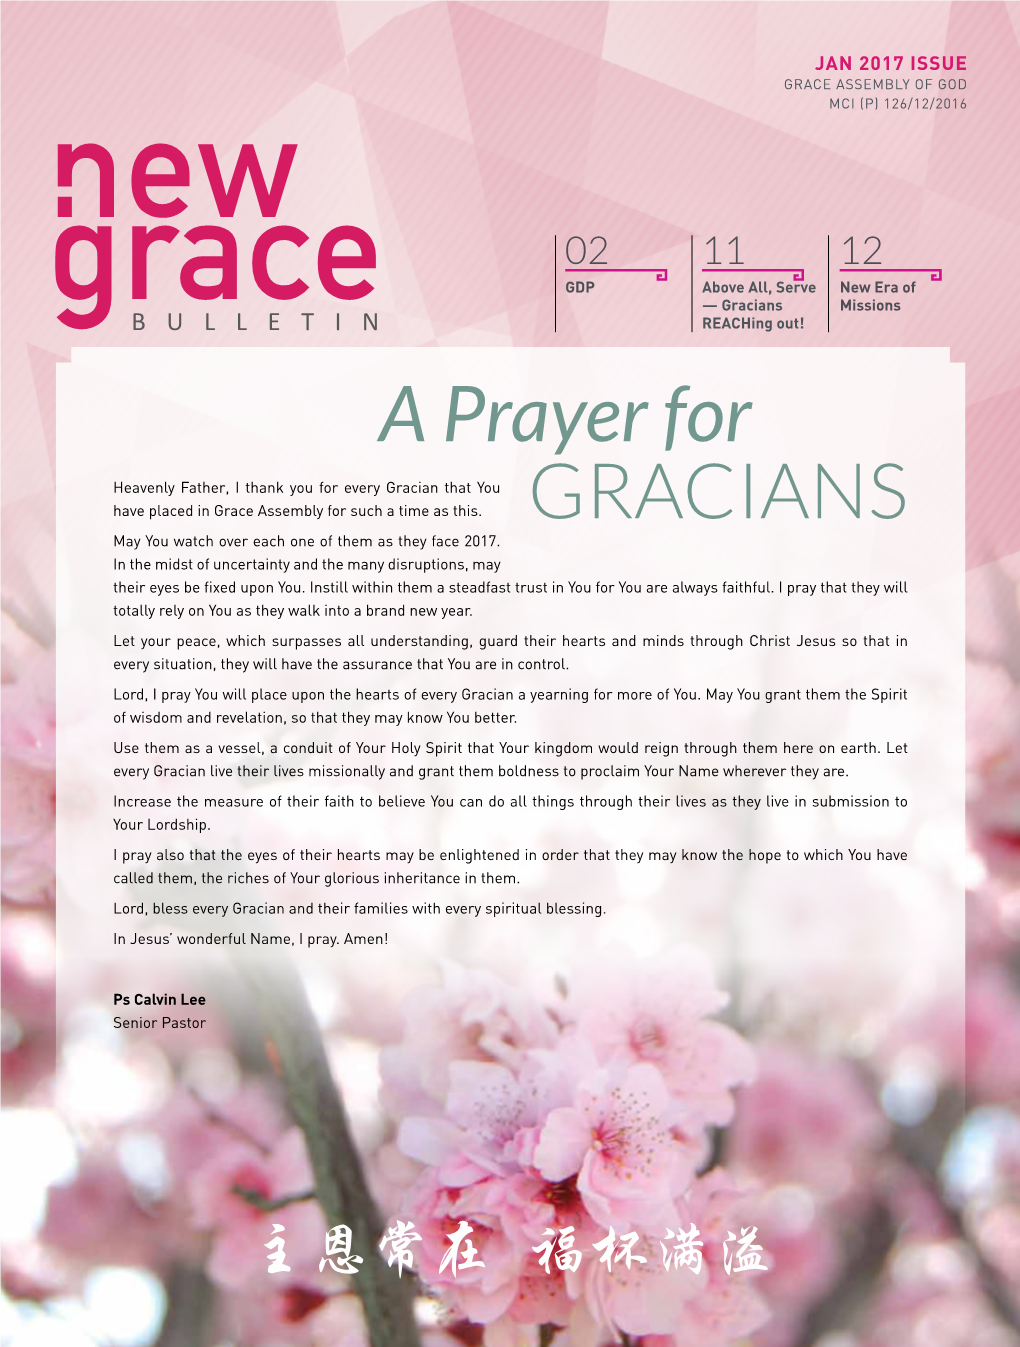 A Prayer for GRACIANS